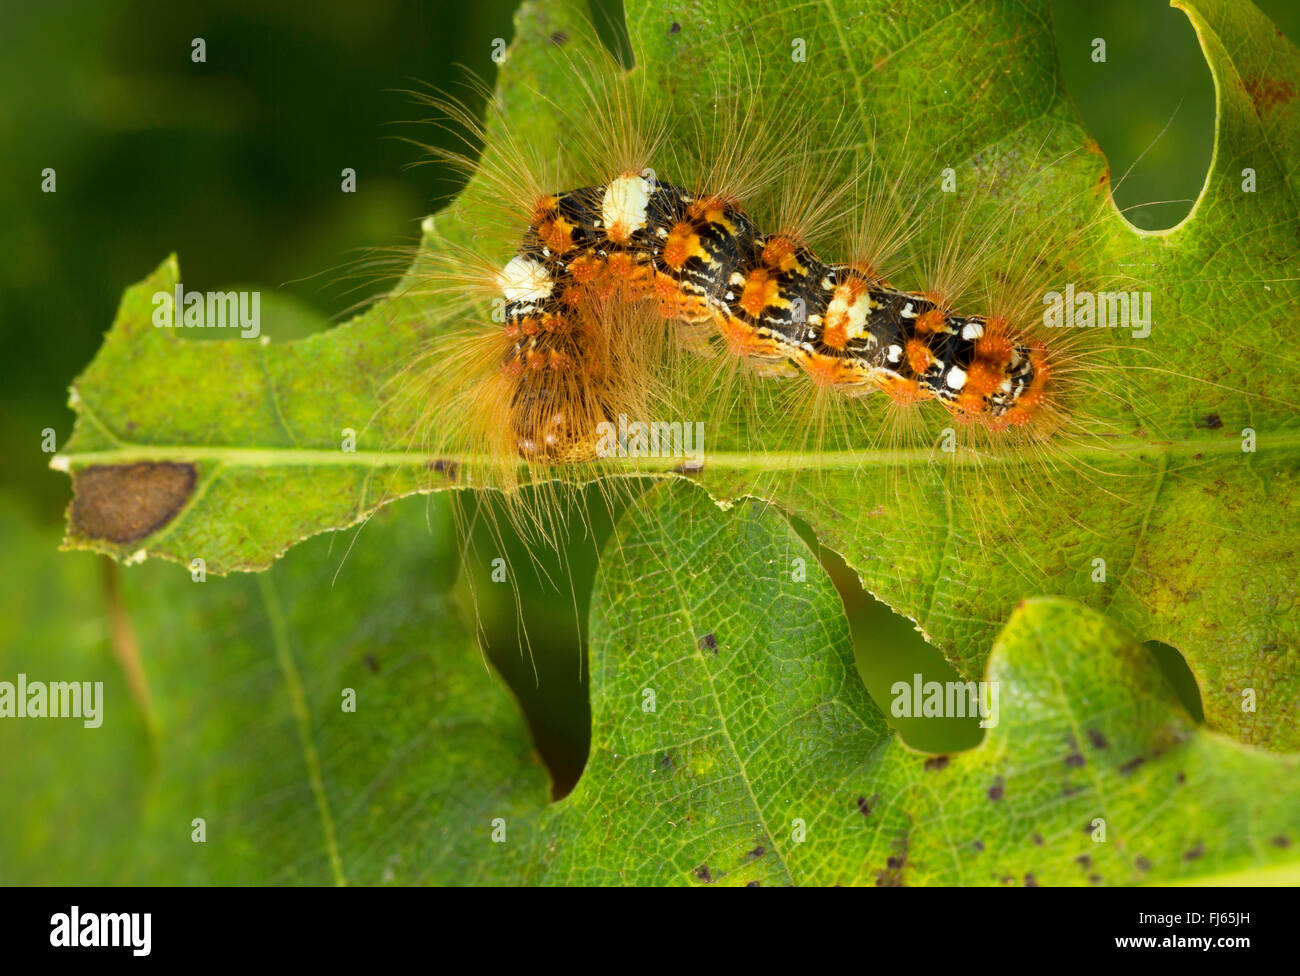 Scarce Merveille du jour (Moma alpium, Daseoacheta alpium, Diphthera alpium), caterpillar with hairs eating at an oak leaf, Germany Stock Photo